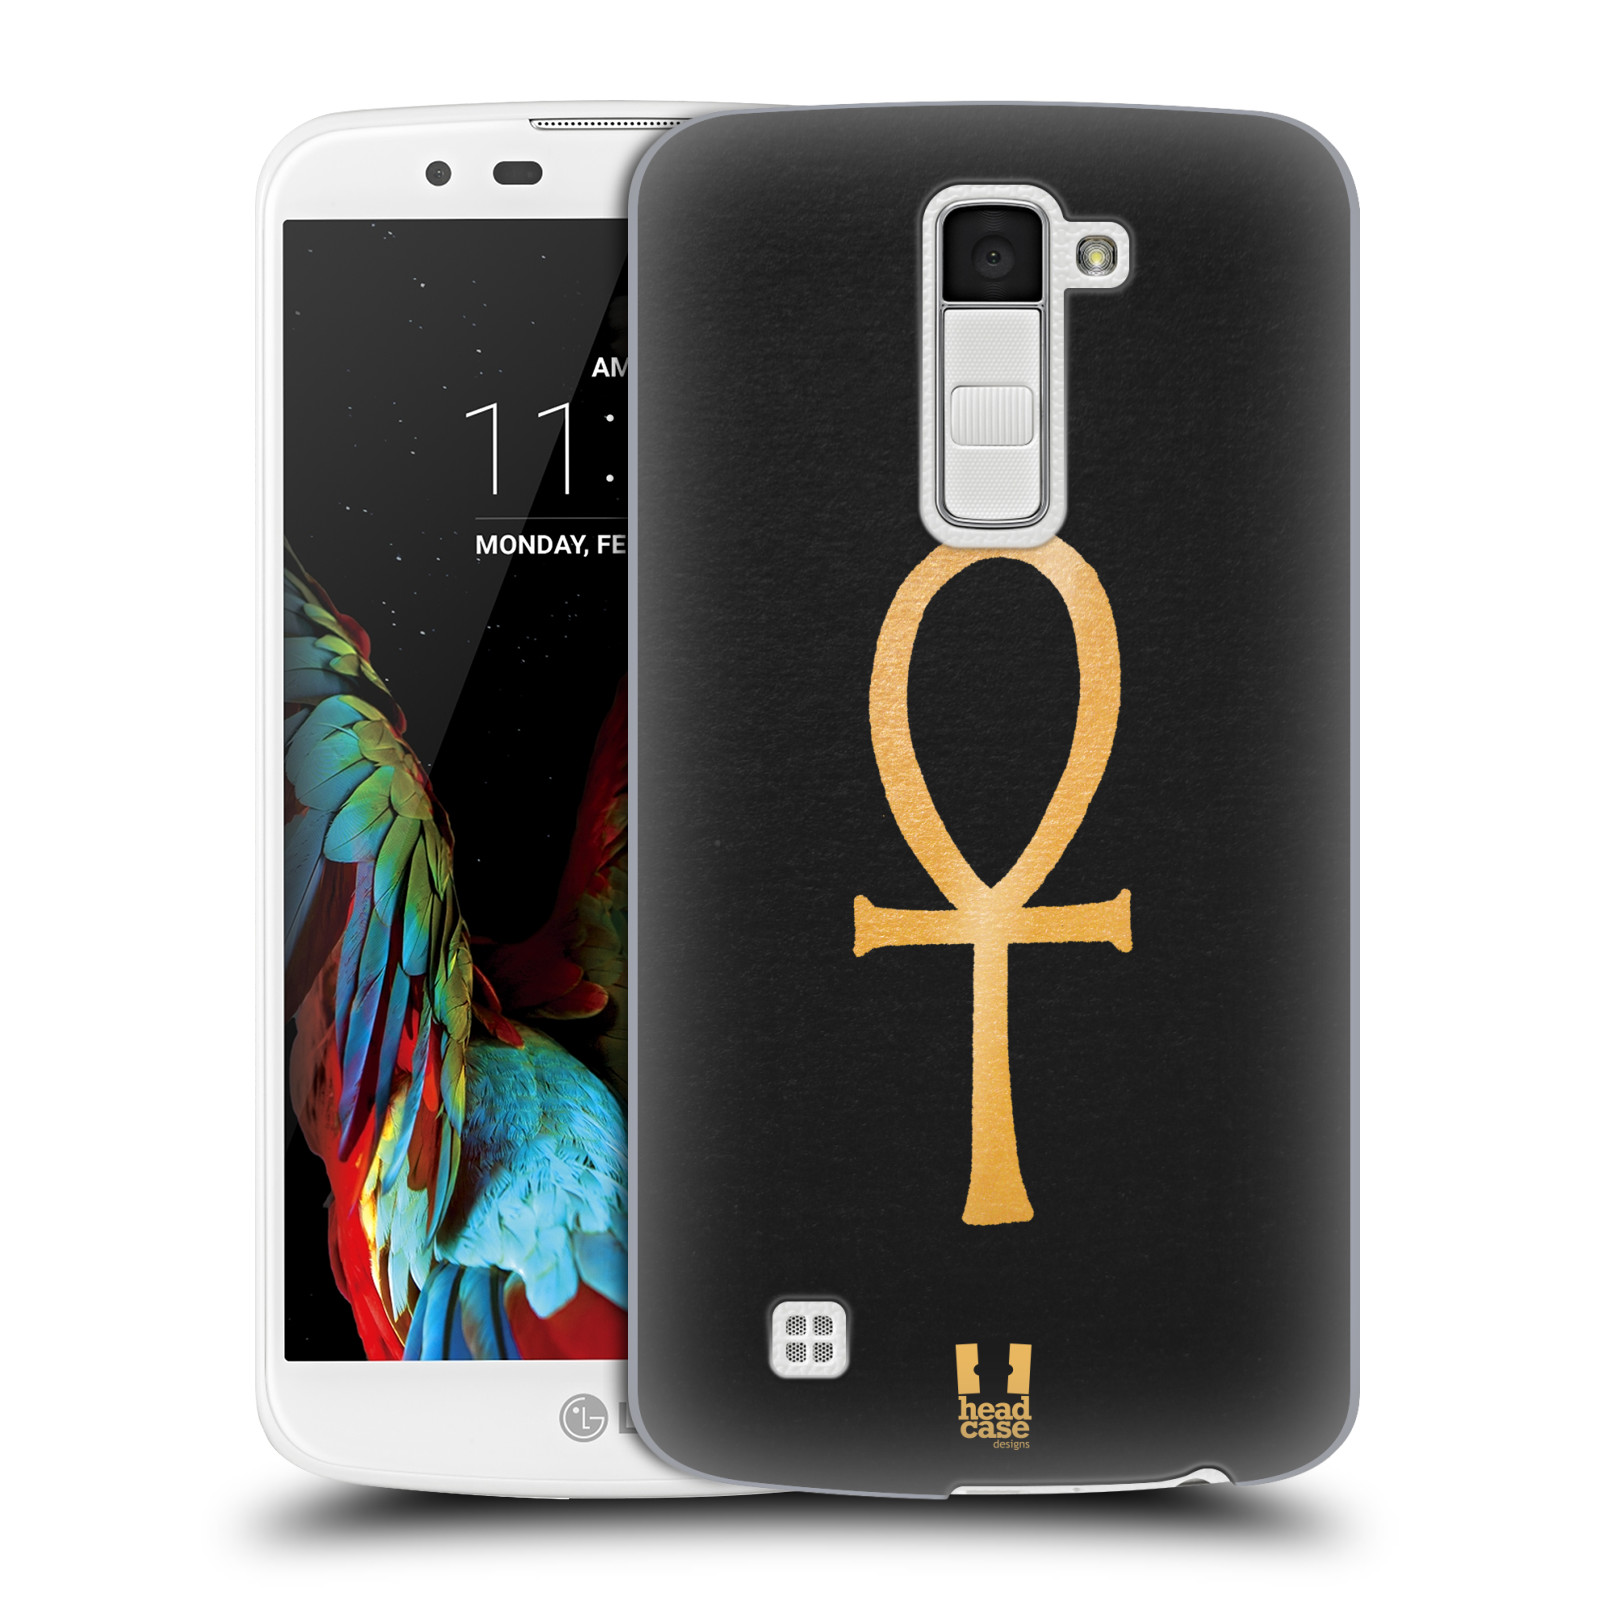 HEAD CASE plastový obal na mobil LG K10 vzor EGYPT zlatá a černá SYMBOL ŽIVOTA